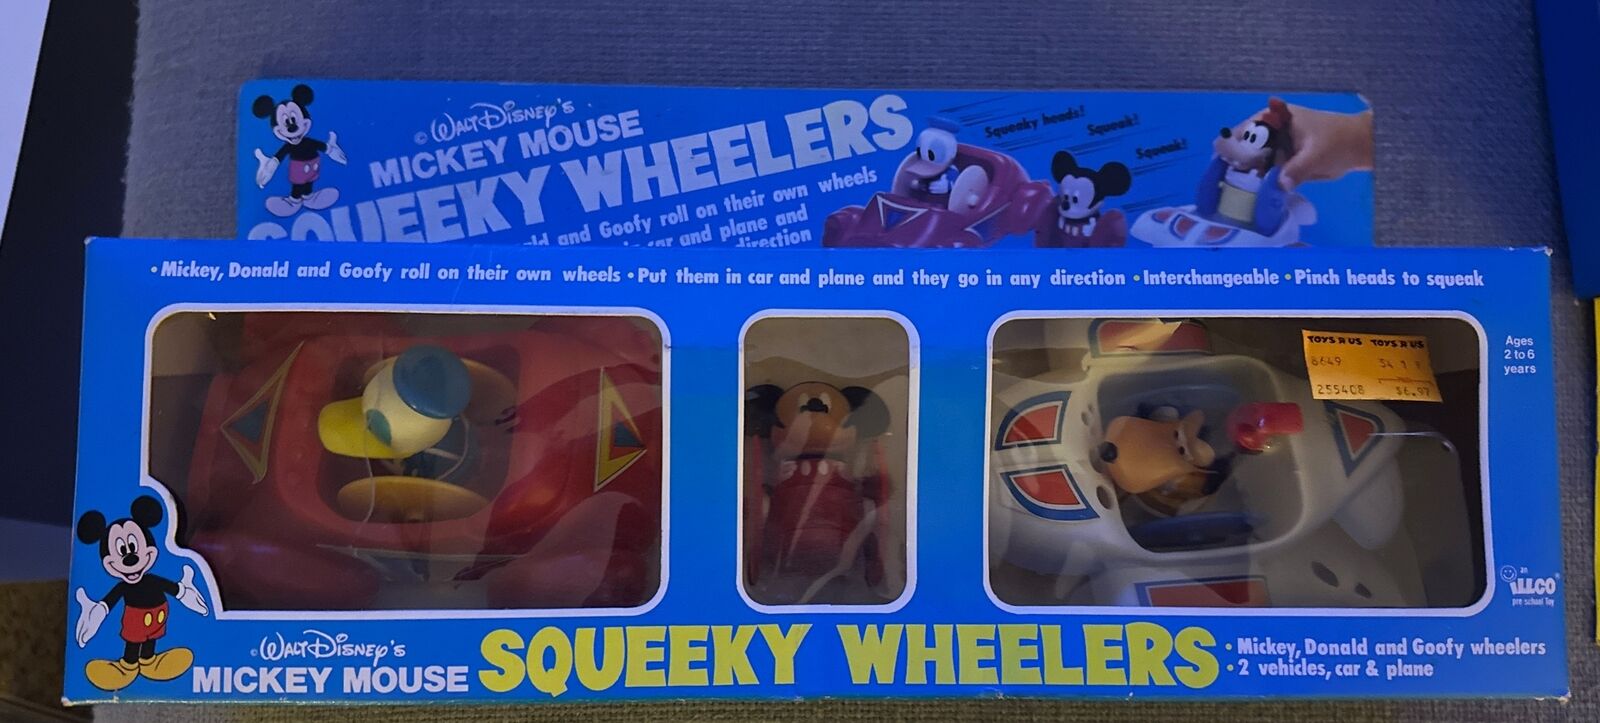 Illco Walt Disneys Mickey Mouse Squeeky Wheelers in Box